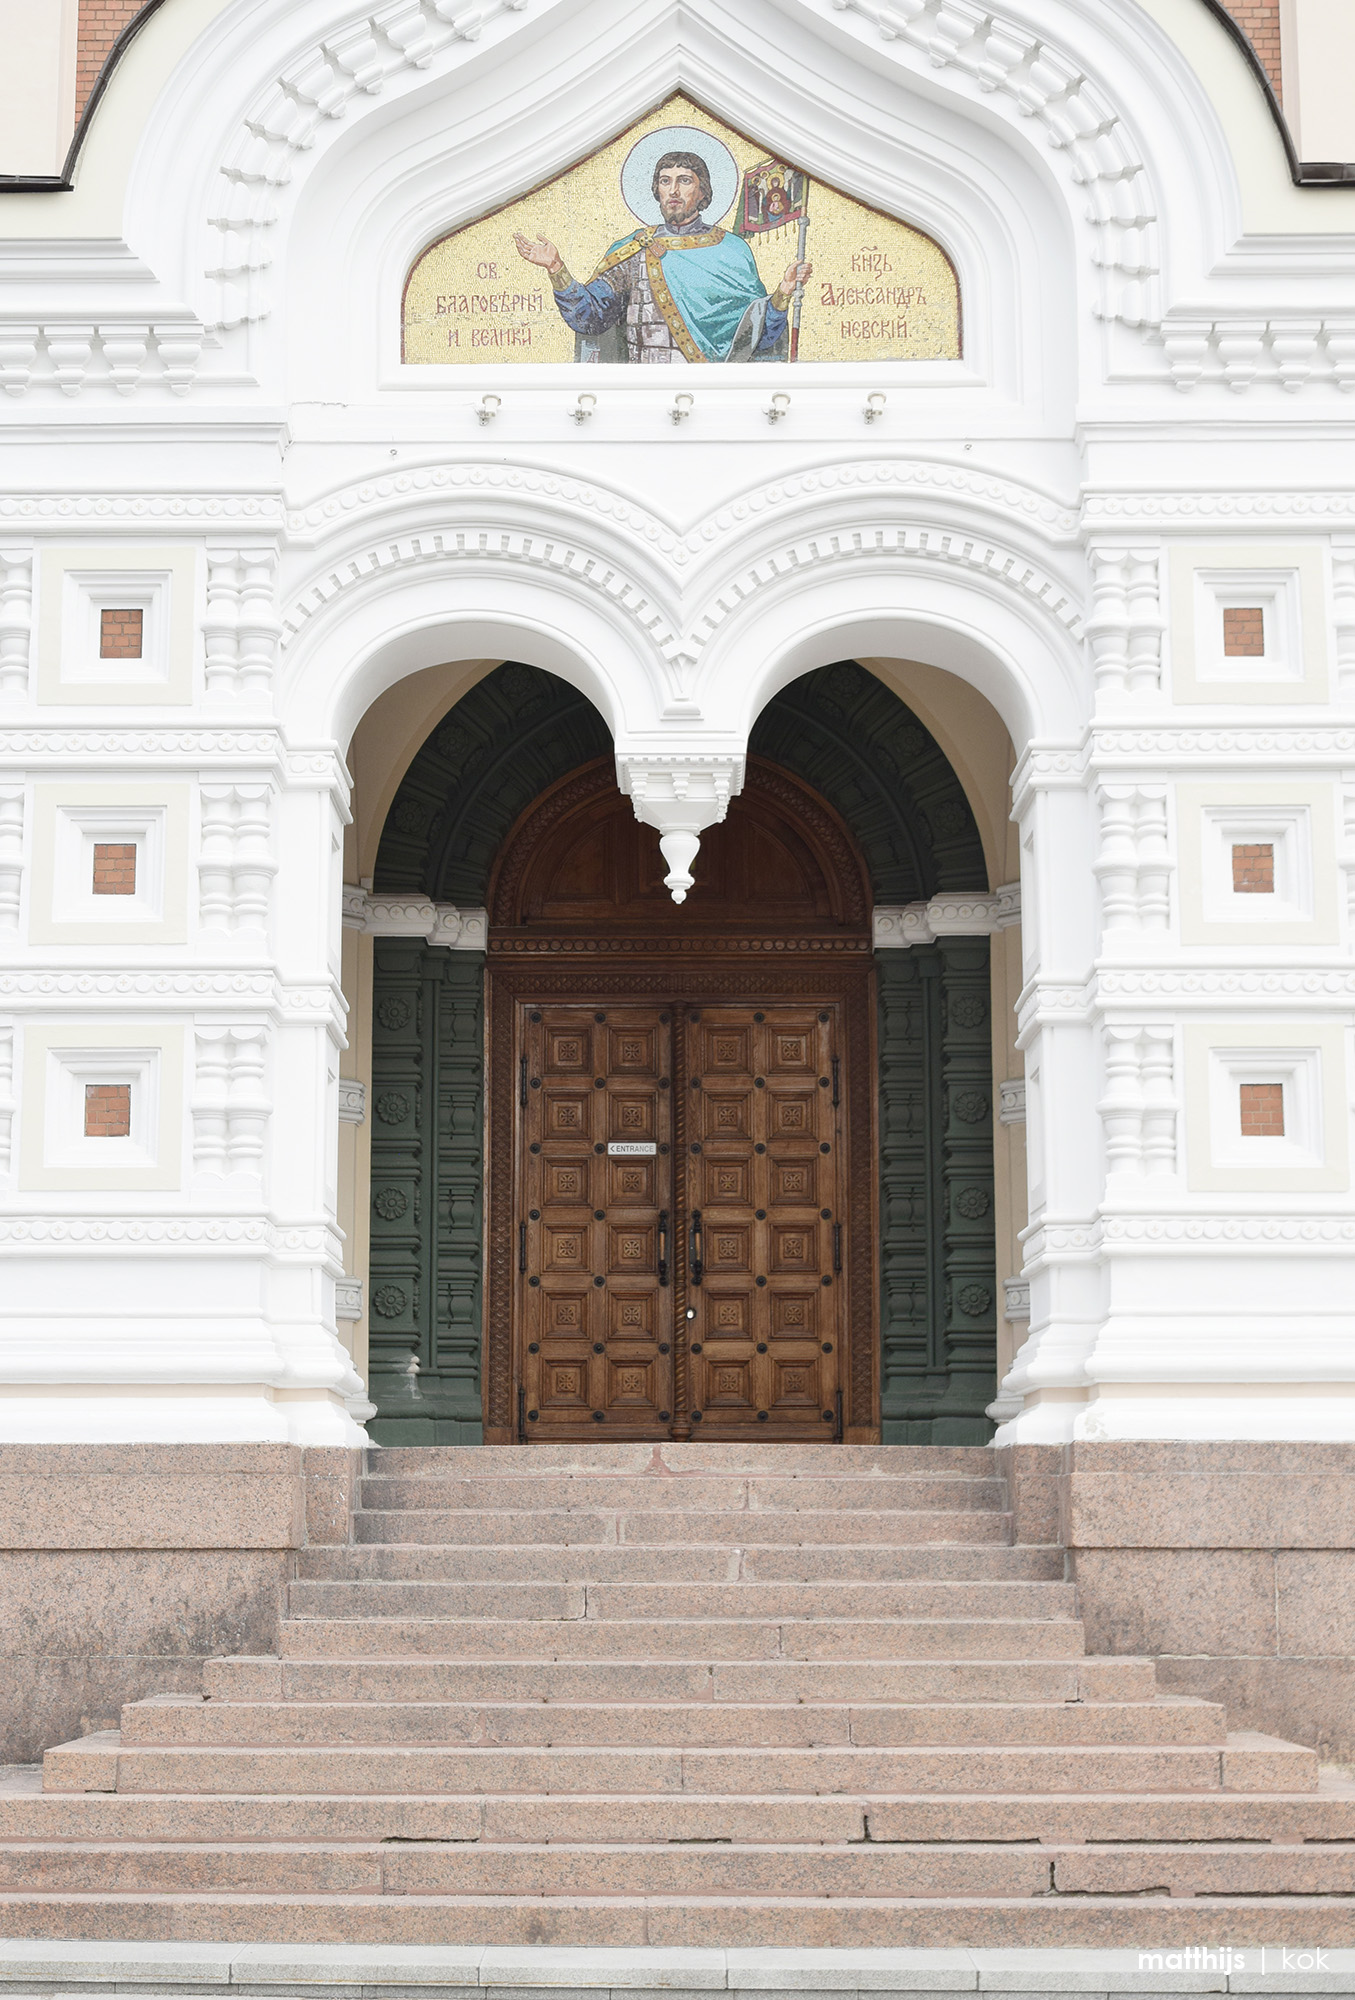 Alexander Nevsky Cathedral, Tallinn, Estonia | Photo by Matthijs Kok